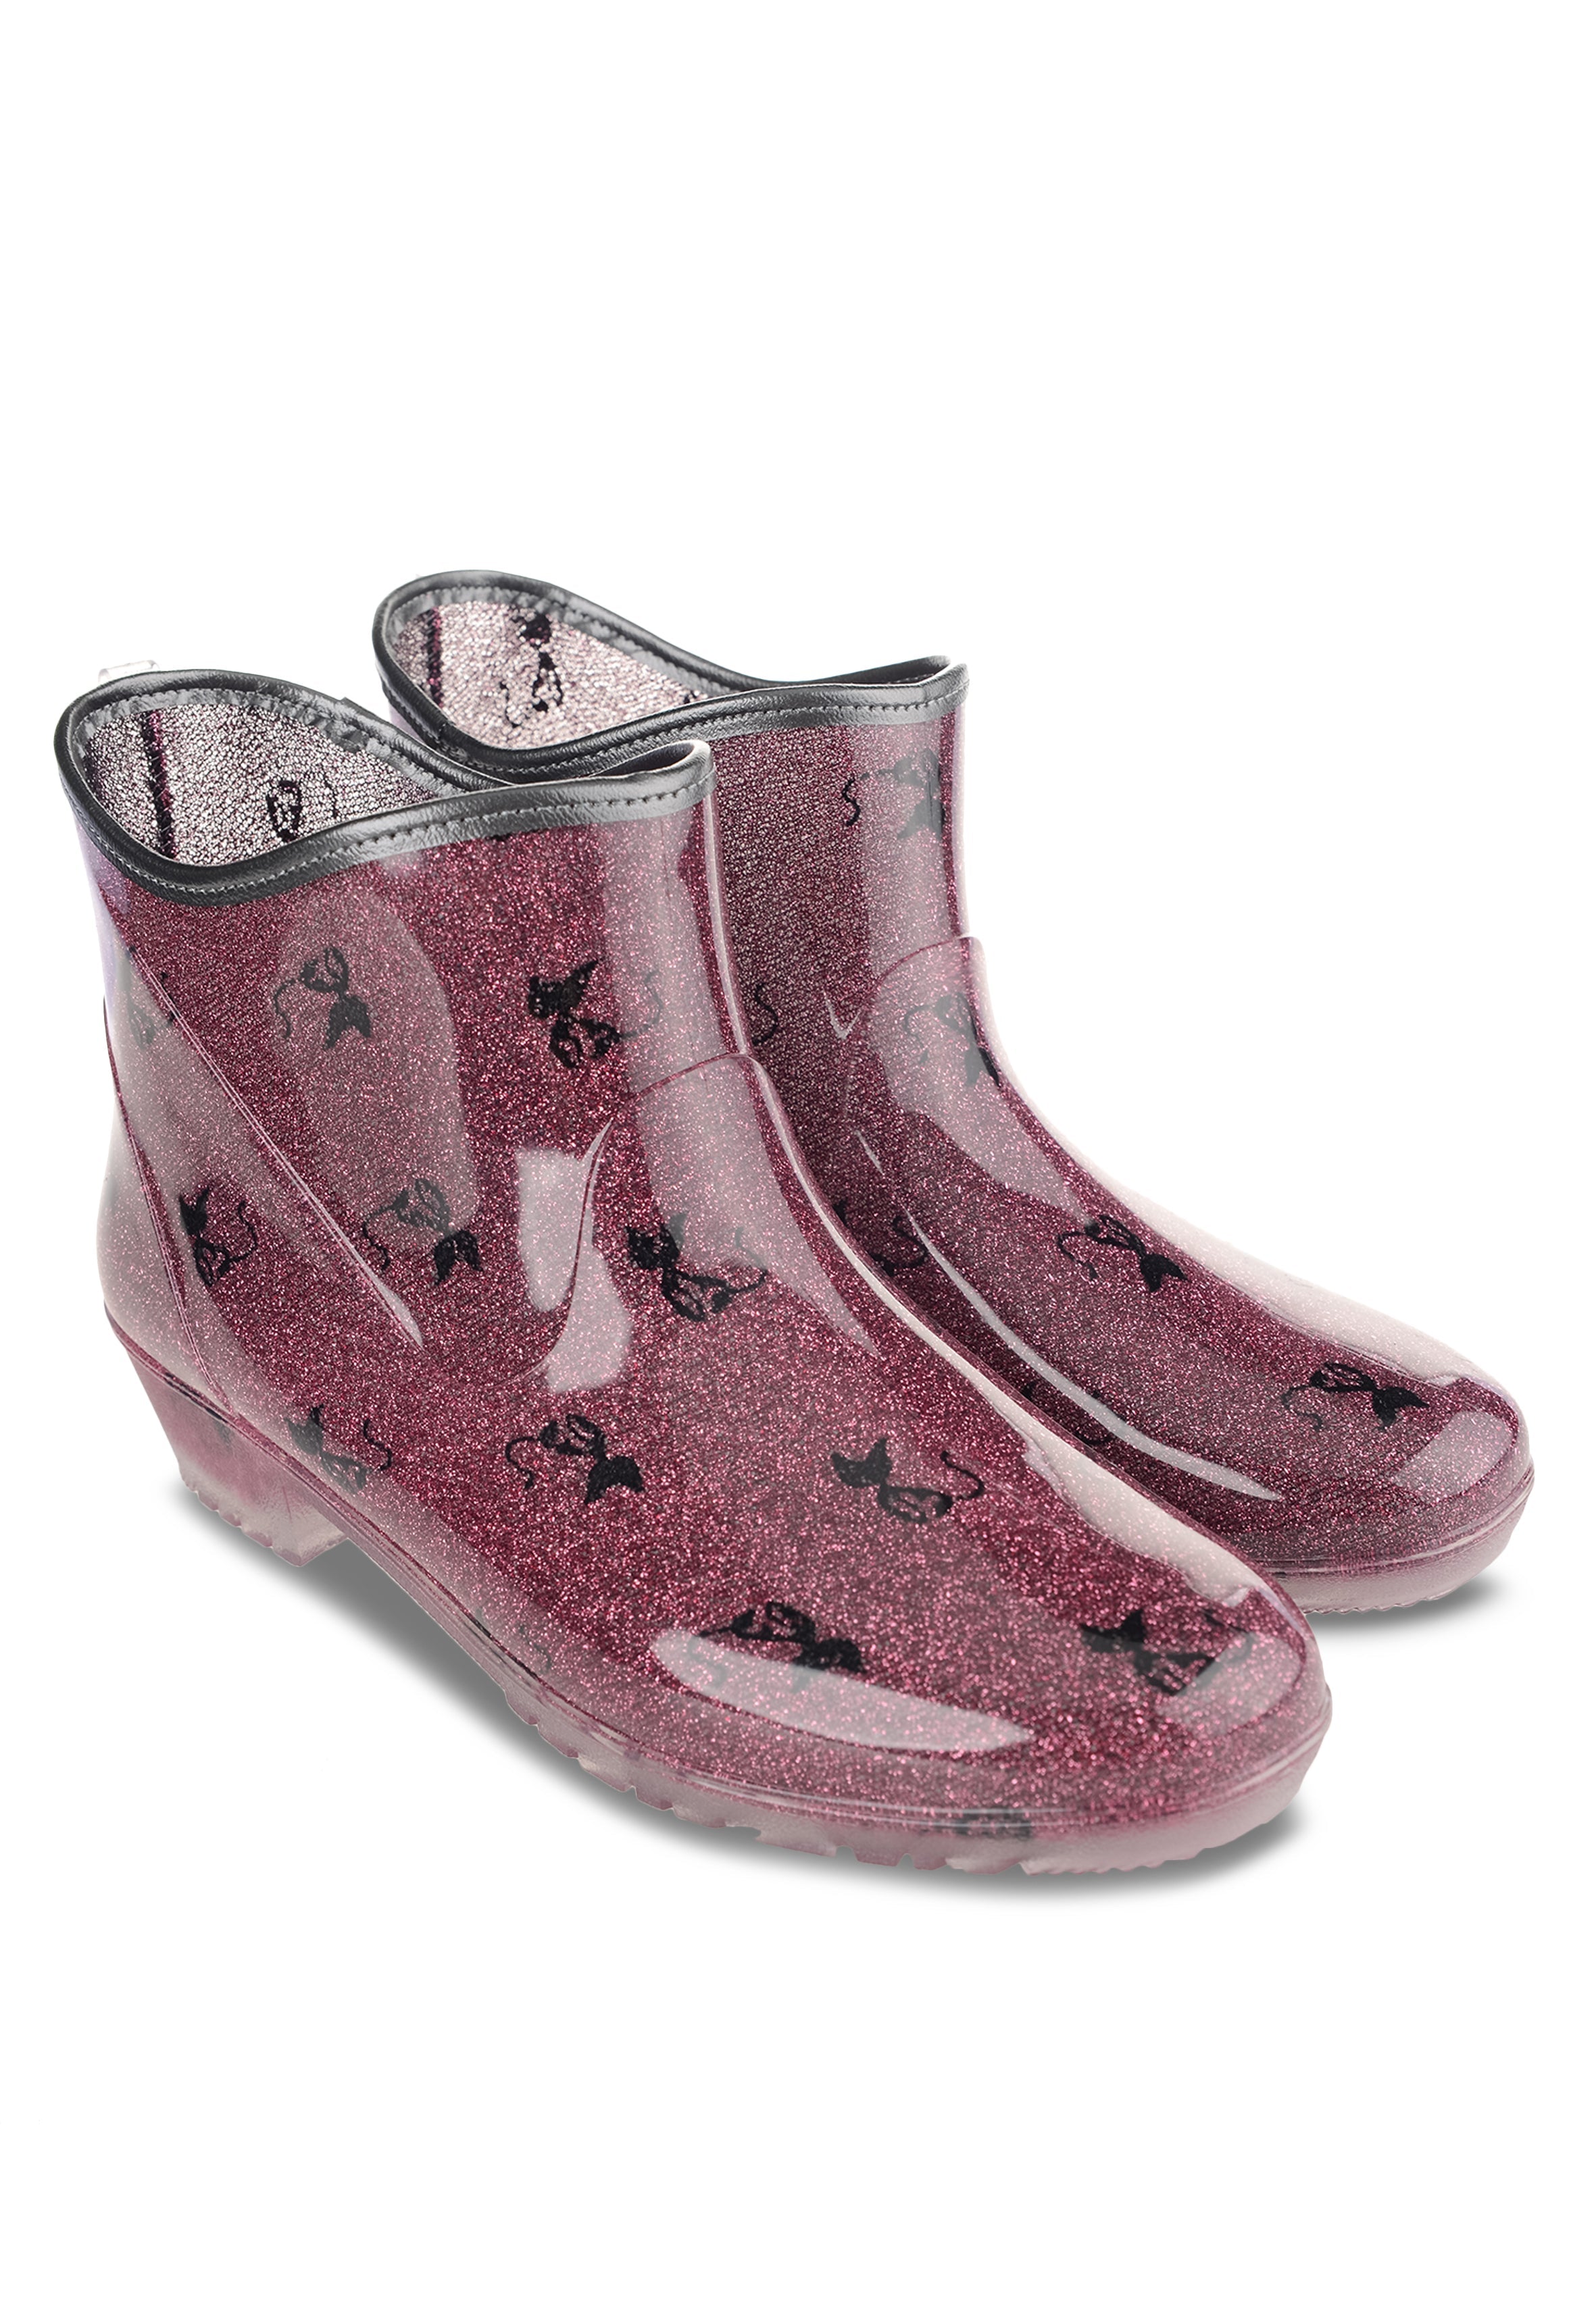 Cats Pattern Classic Lady Rain Boots with Heels-Charming-WI-JP Size-3: 36S-偉豐鞋 WELL SHOE HK-Well Shoe-偉豐鞋-偉豐網-荃灣鞋店-Functional shoes-Hong Kong Tsuen Wan Shoe Store-Tai Wan Shoe-Japan Shoe-高品質功能鞋-台灣進口鞋-日本進口鞋-High-quality shoes-鞋類配件-荃灣進口鞋-香港鞋店-優質鞋類產品-水靴-帆布鞋-廚師鞋-香港鞋品牌-Hong Kong Shoes brand-長者鞋-Hong Kong Rain Boots-Kitchen shoes-Cruthes-Slipper-Well Shoe Hong Kong-Anello-Arriba-休閒鞋-舒適鞋-健康鞋-皮鞋-Healthy shoes-Leather shoes-Hiking shoes